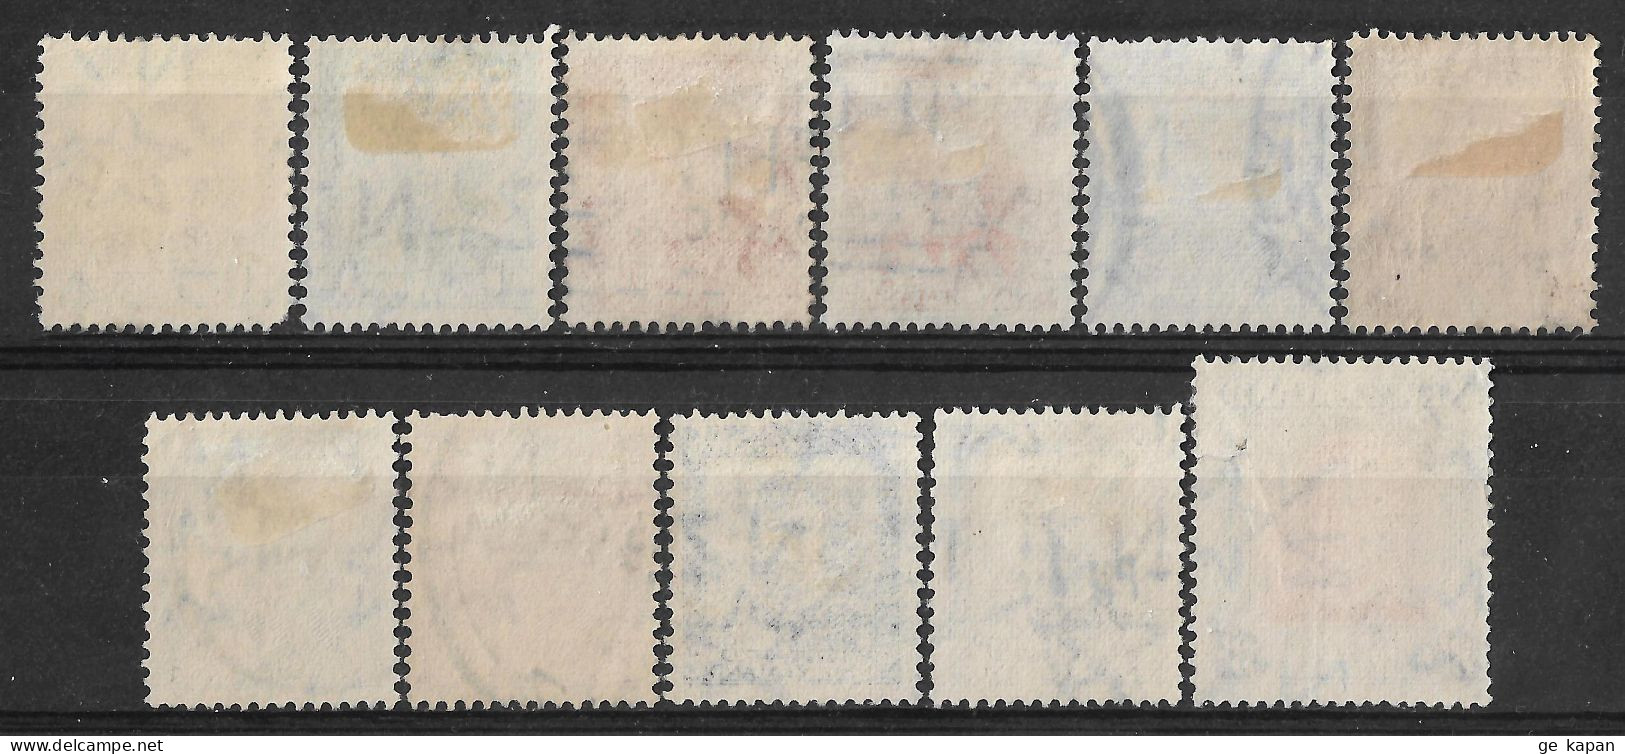 1938-1947 NEW ZEALAND Set Of 11 Used Stamps (Scott # 227A,228B,228C,258,260-264,268) CV $4.40 - Usati